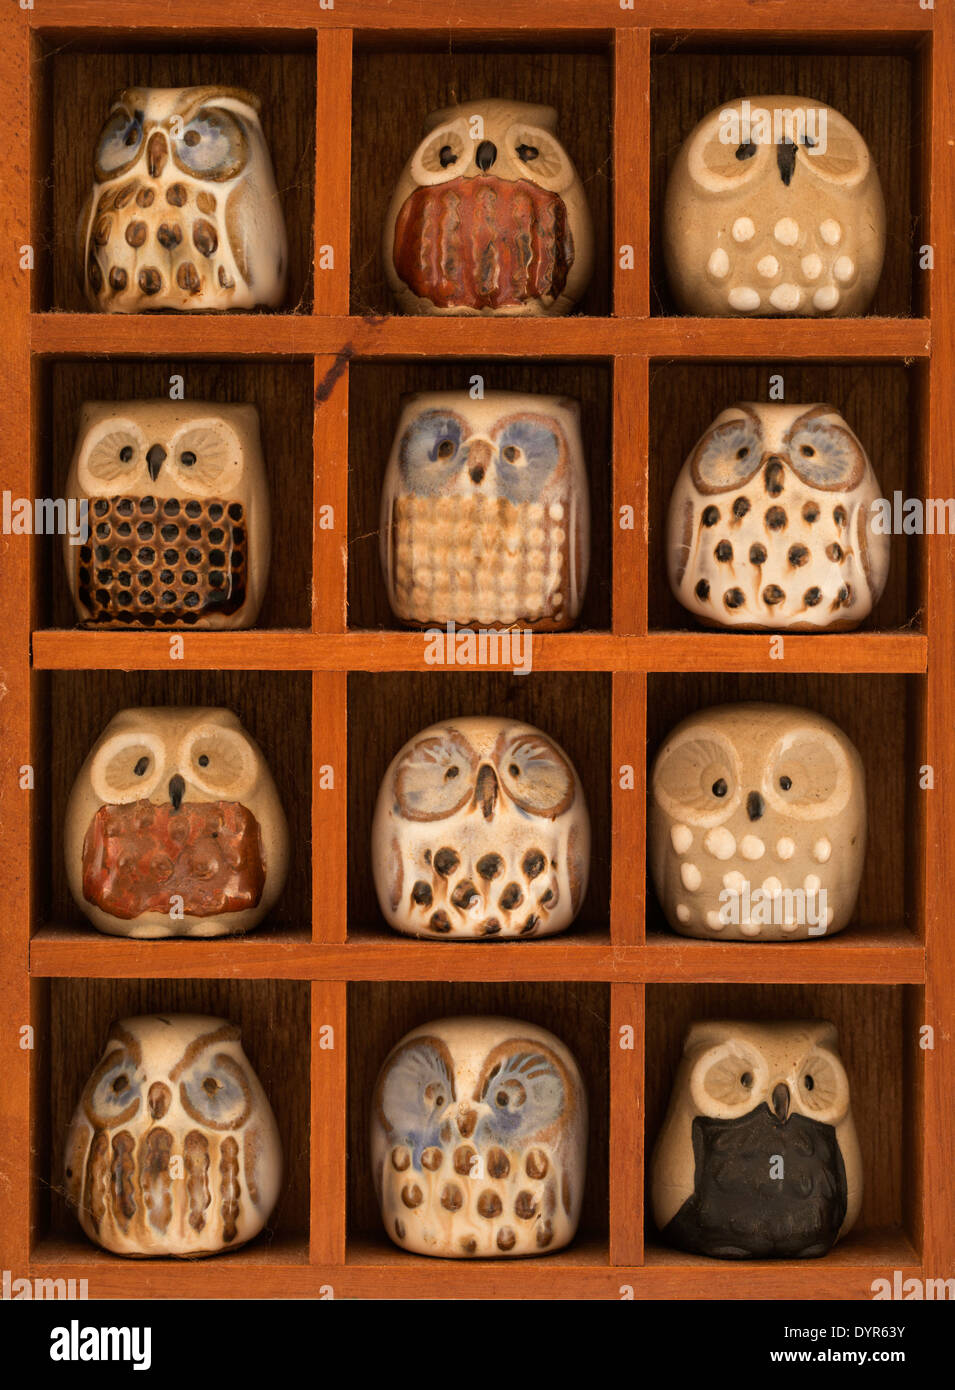 Wooden display shelf of twelve miniature glazed pottery owl ornaments Stock Photo